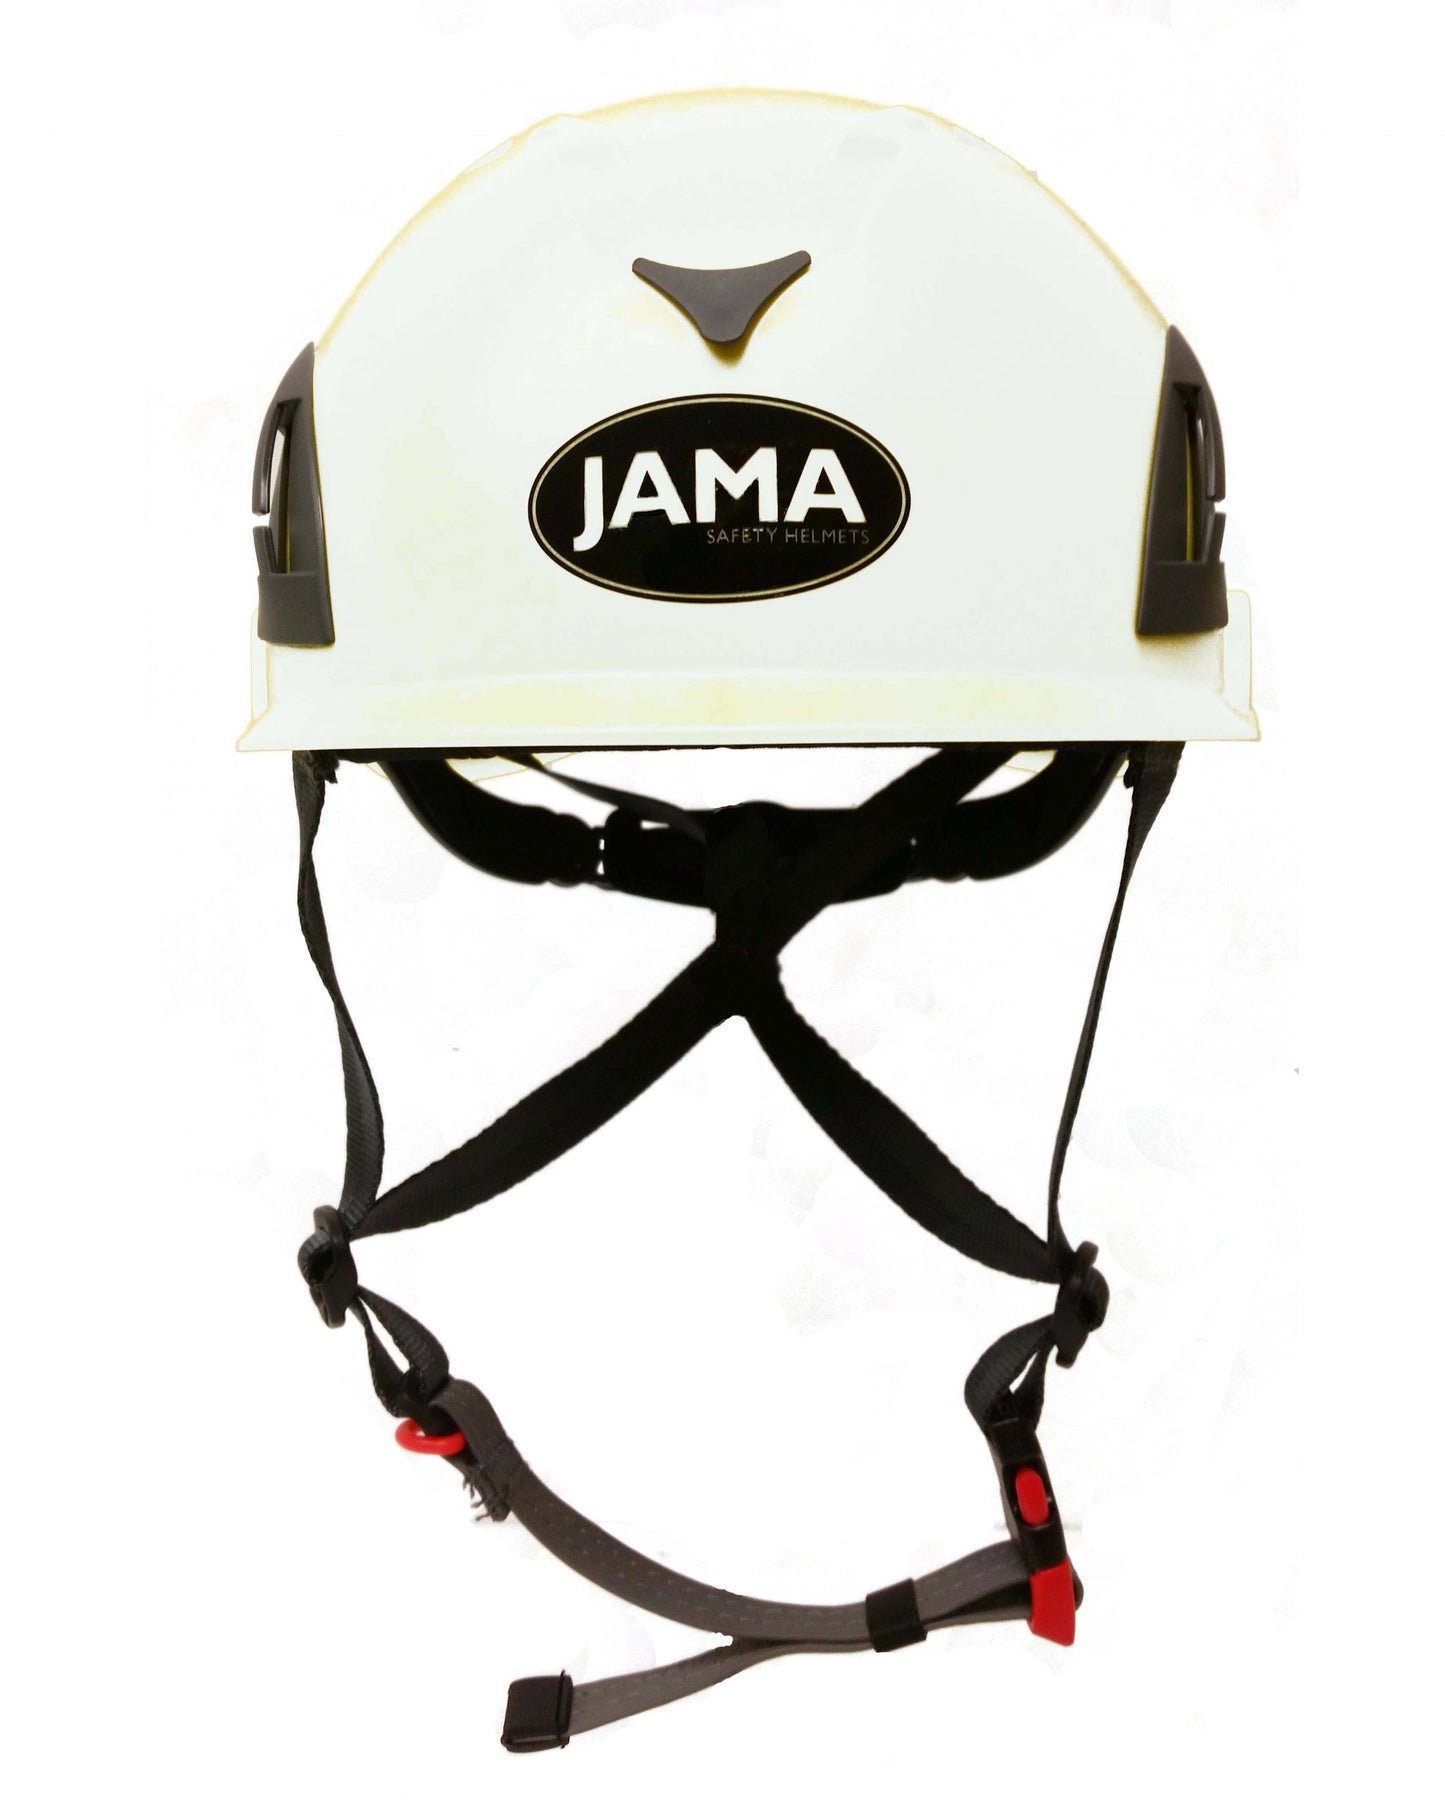 LRV8 Jama Safety Helmet Kit with Visor